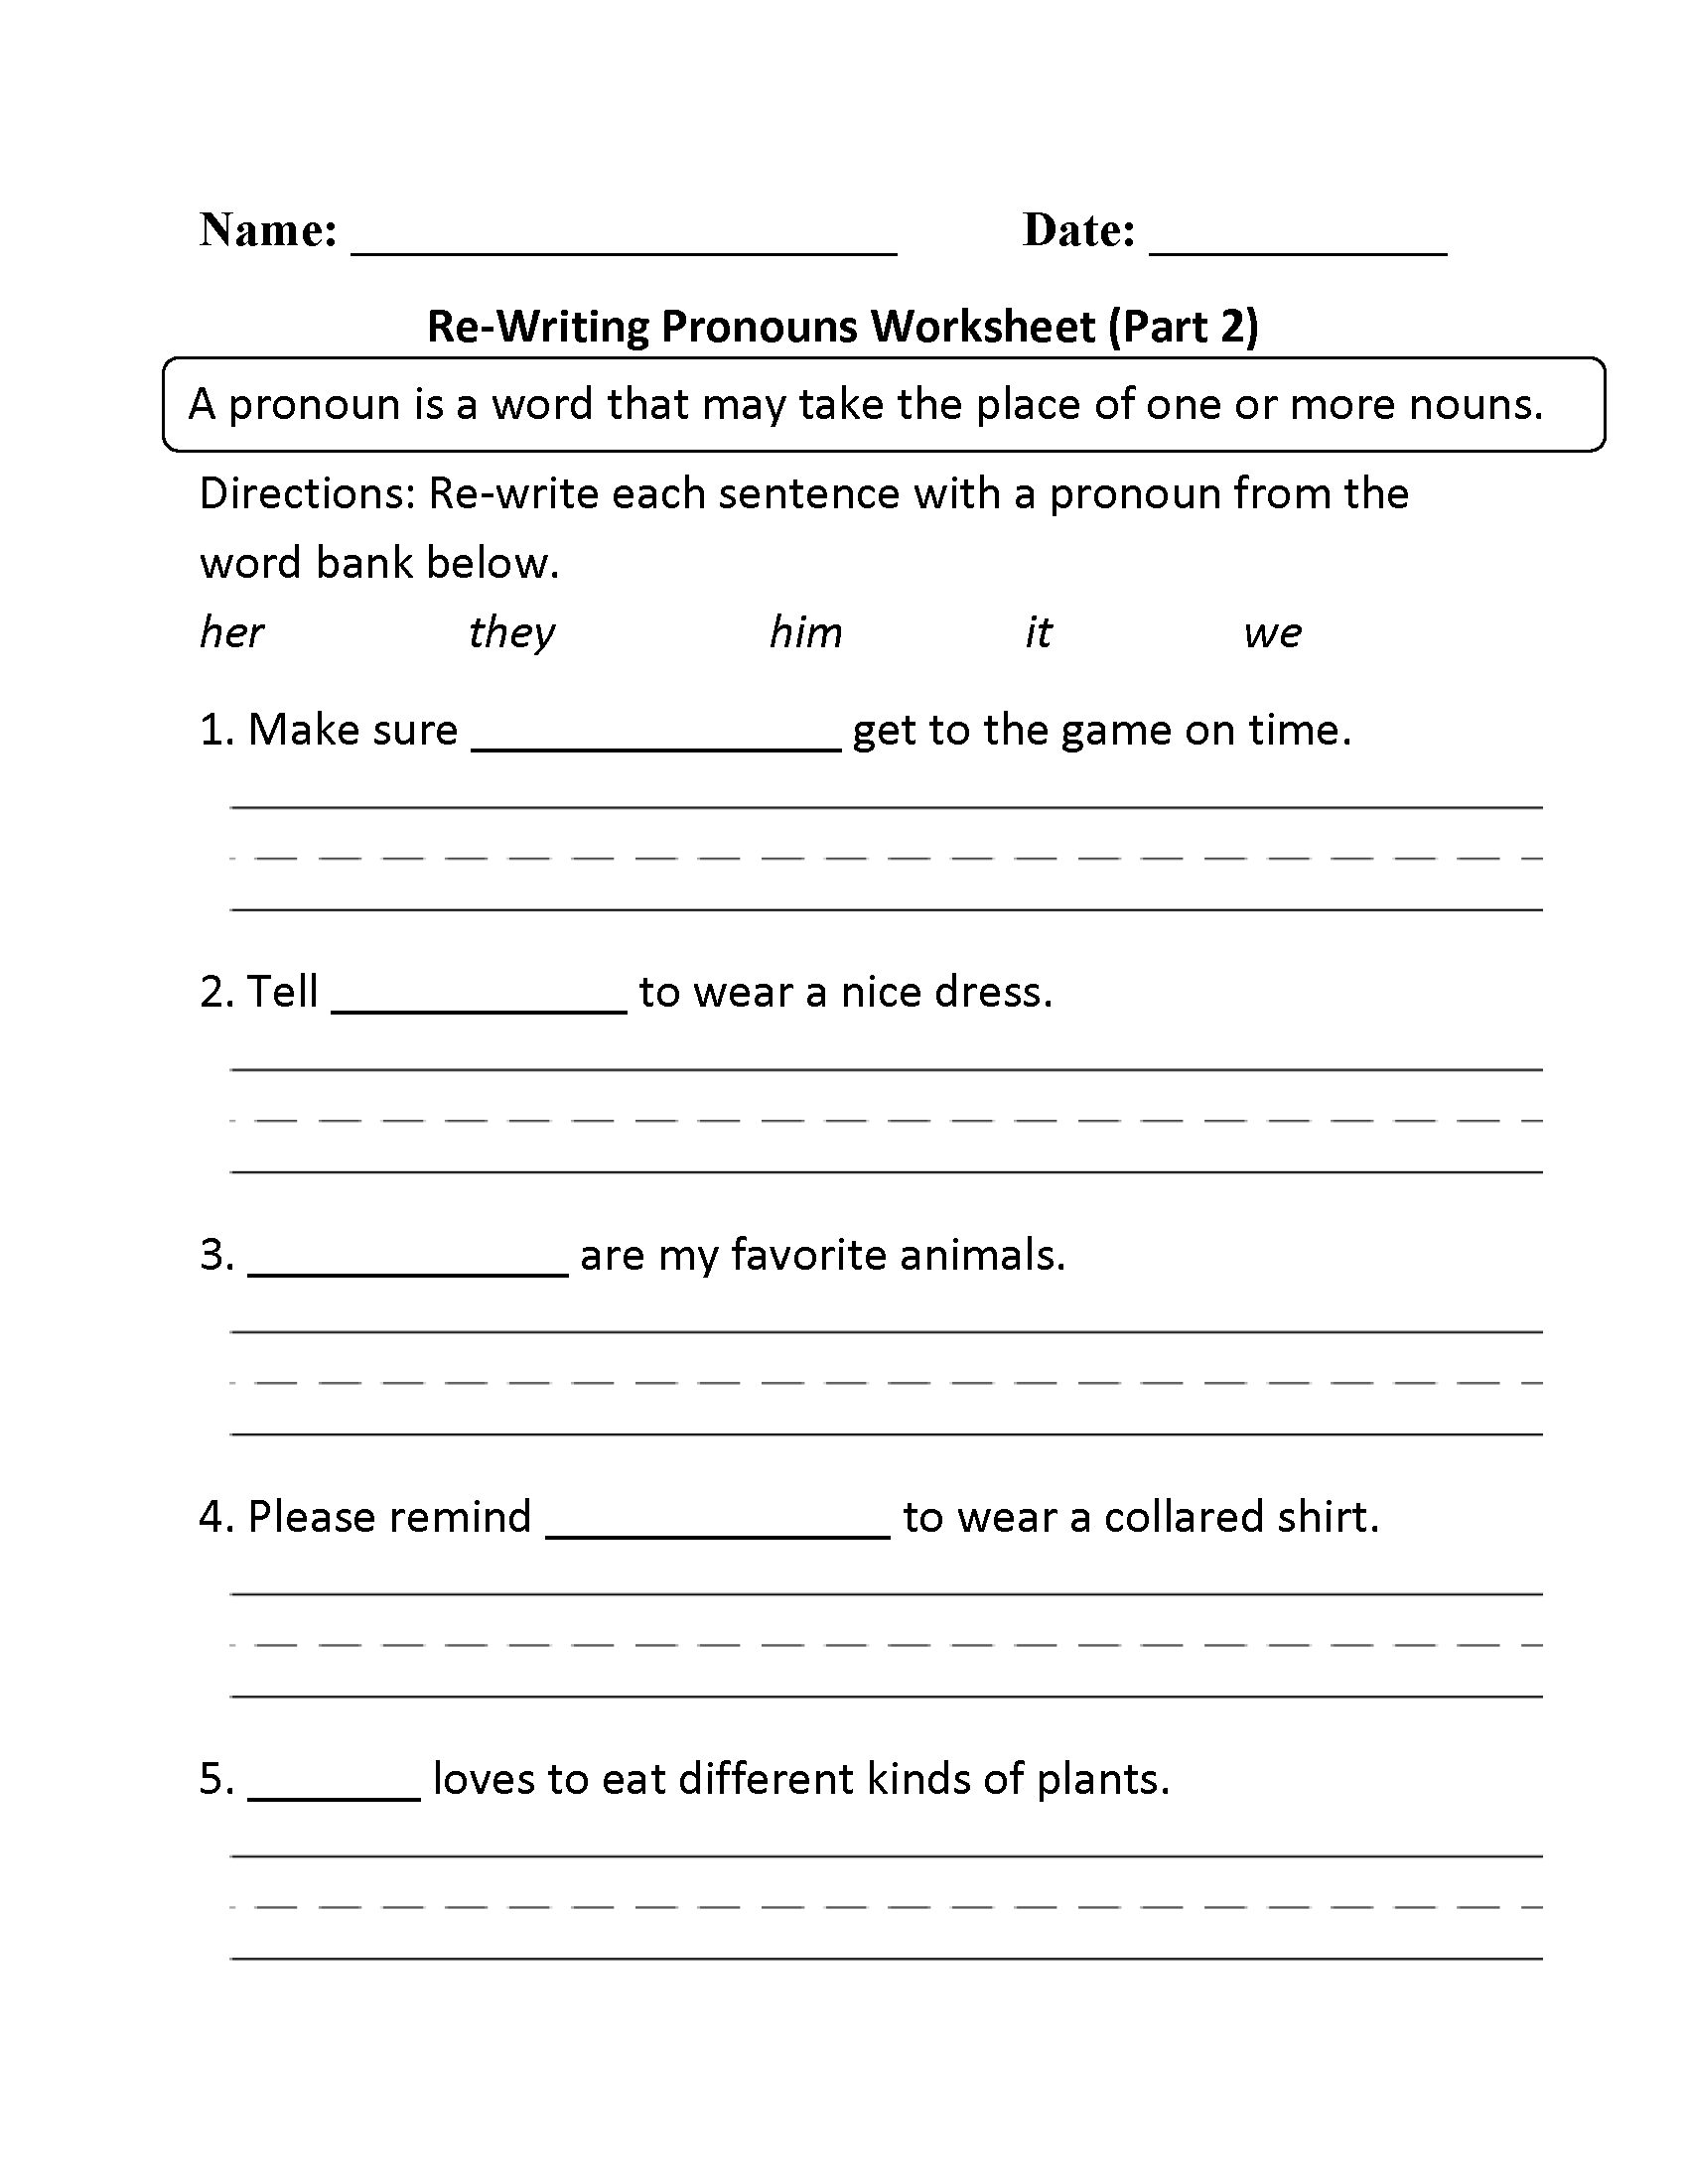 Worksheet On Pronouns for Grade 2 Image